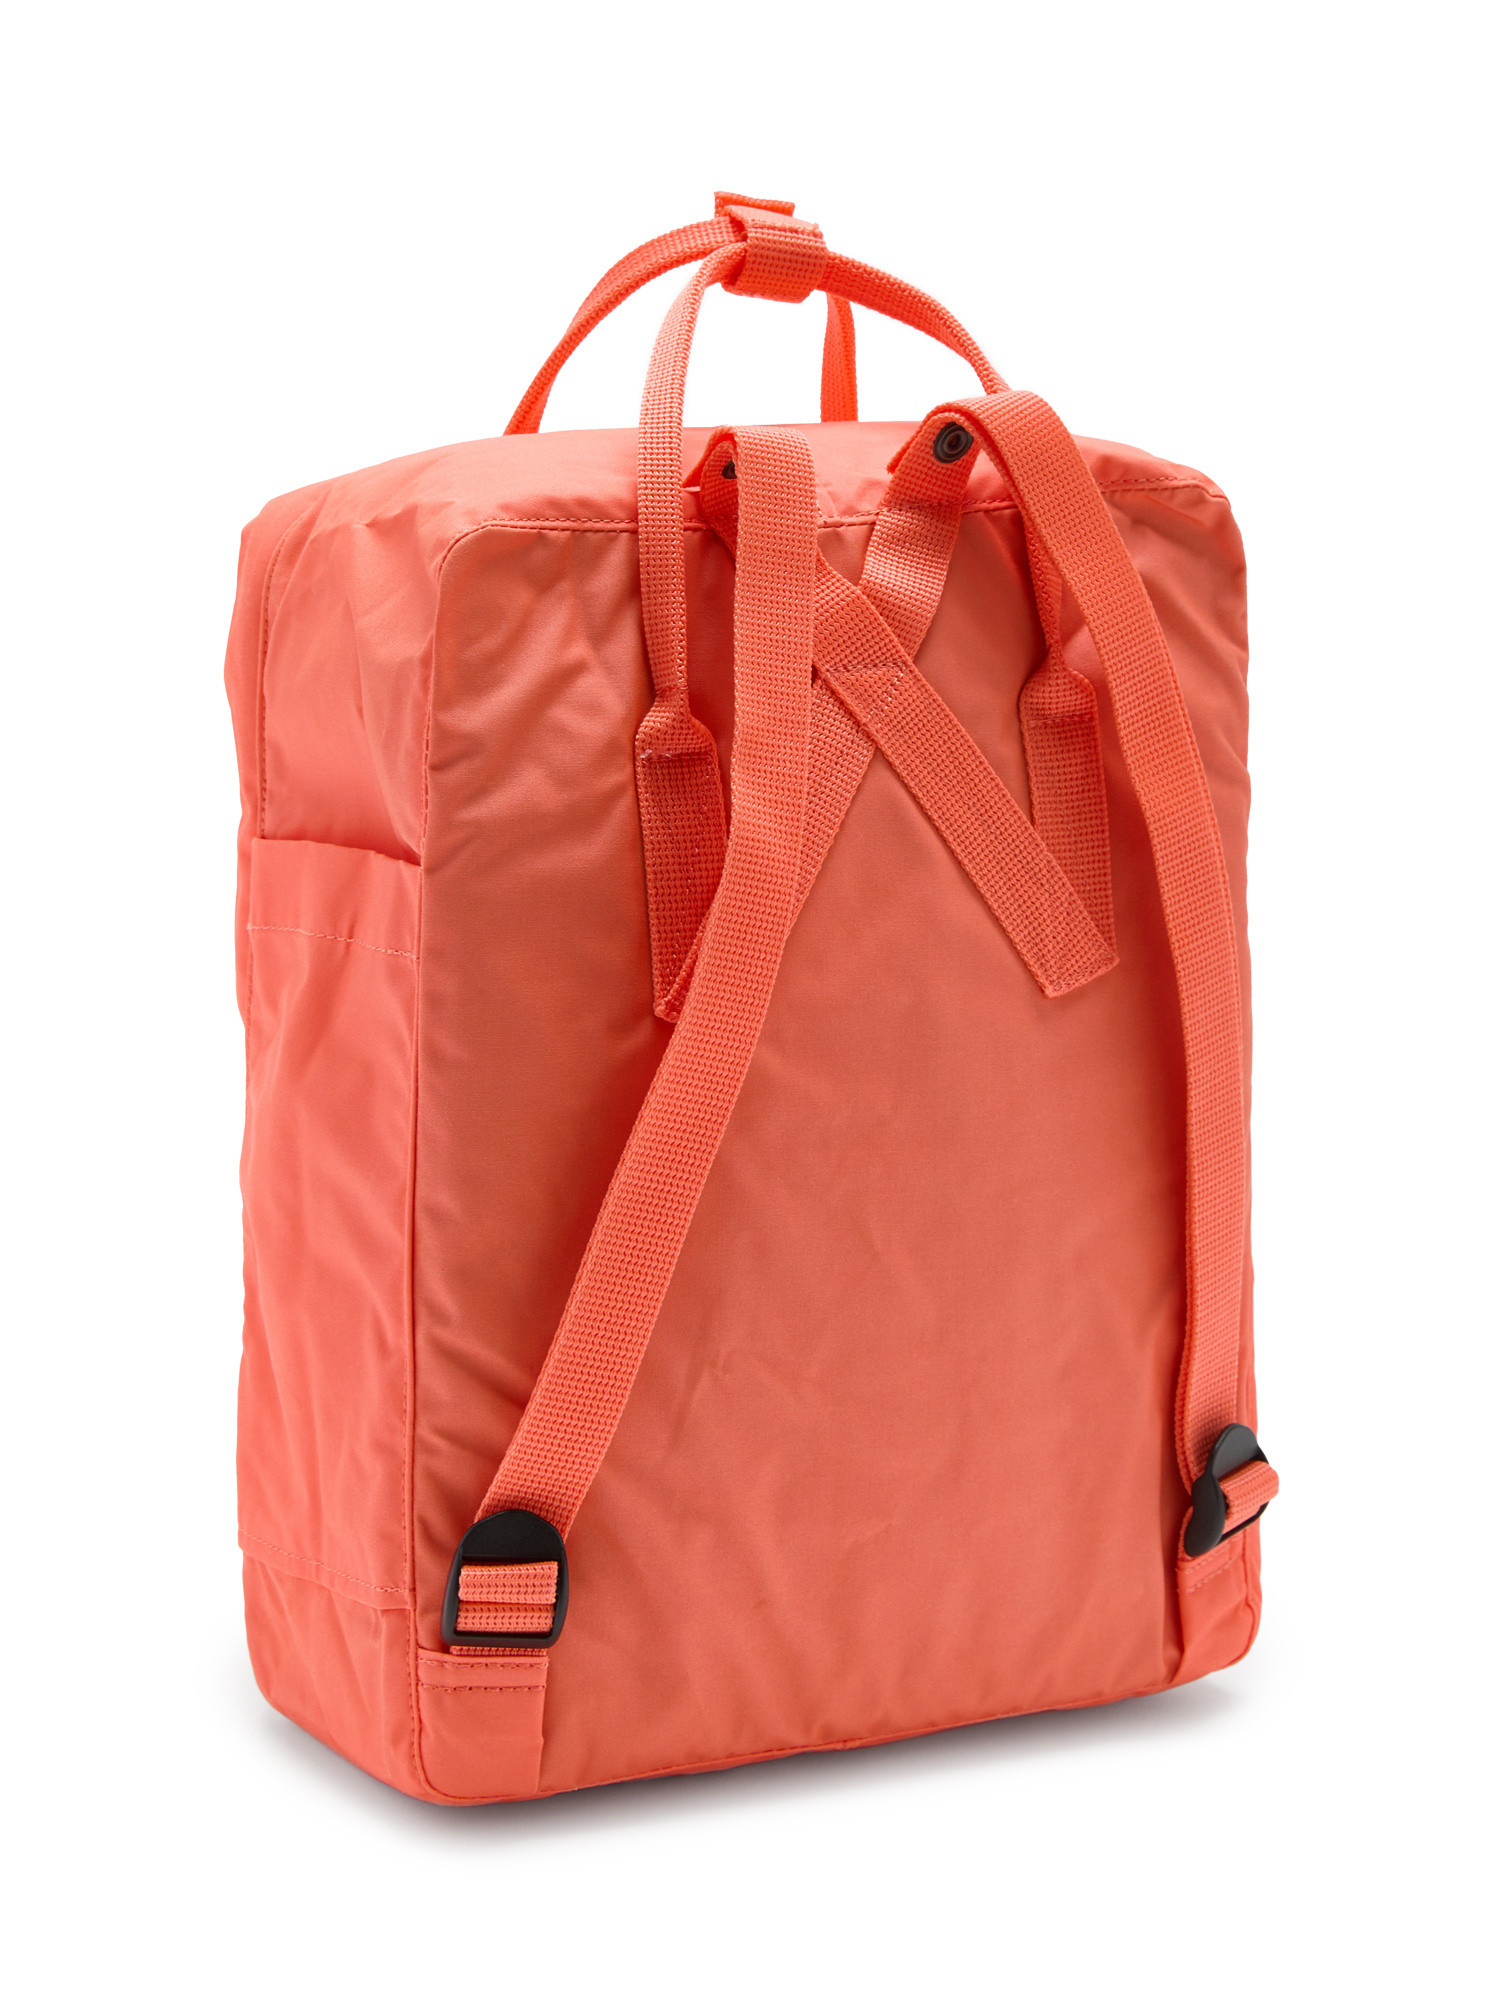 Fjallraven - Classic Kånken backpack in durable Vinylon fabric, Light Orange, large image number 1